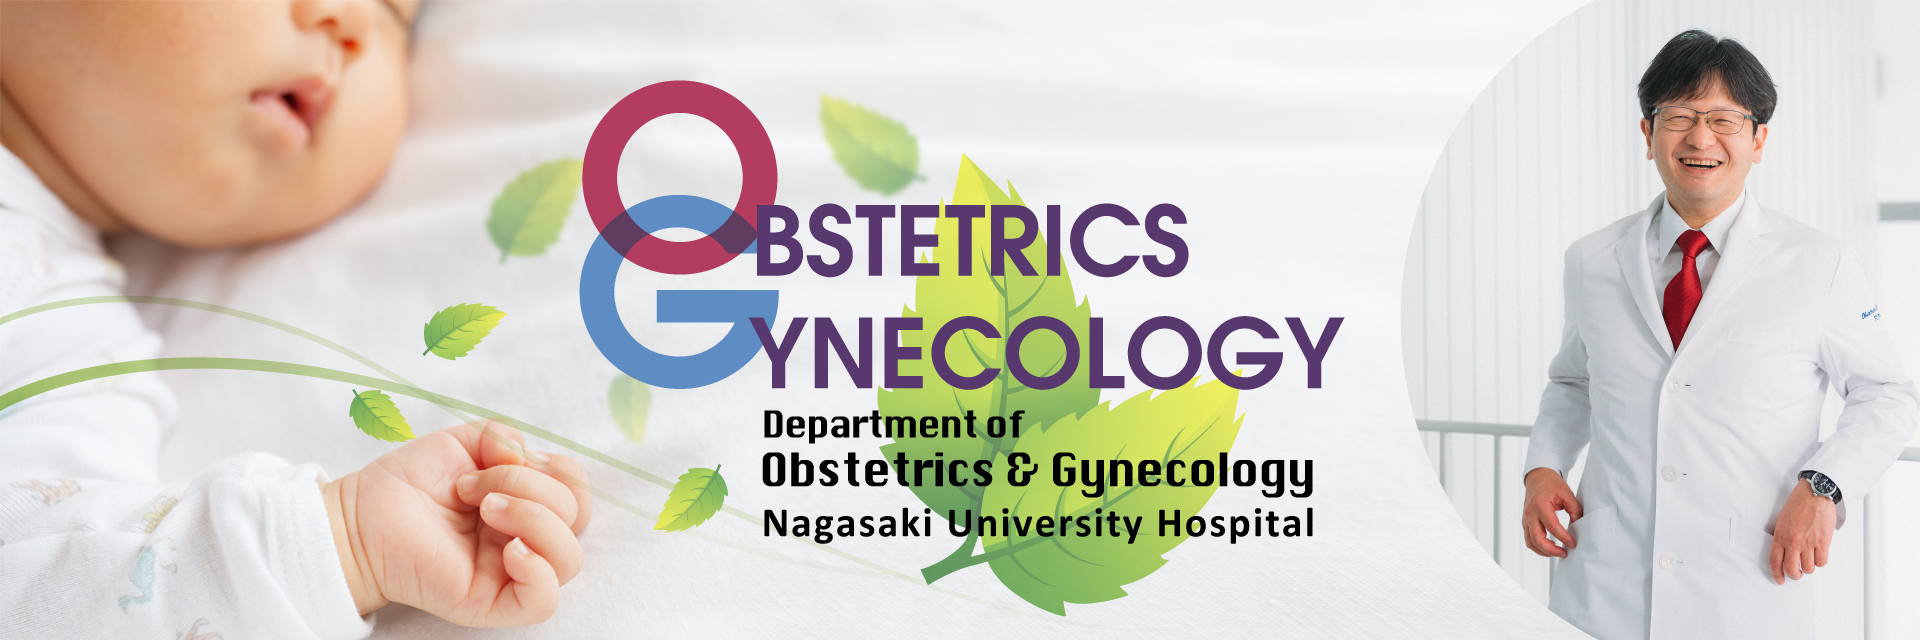 Department of Obstertrics & Gynecology, Nagasaki University Hospital